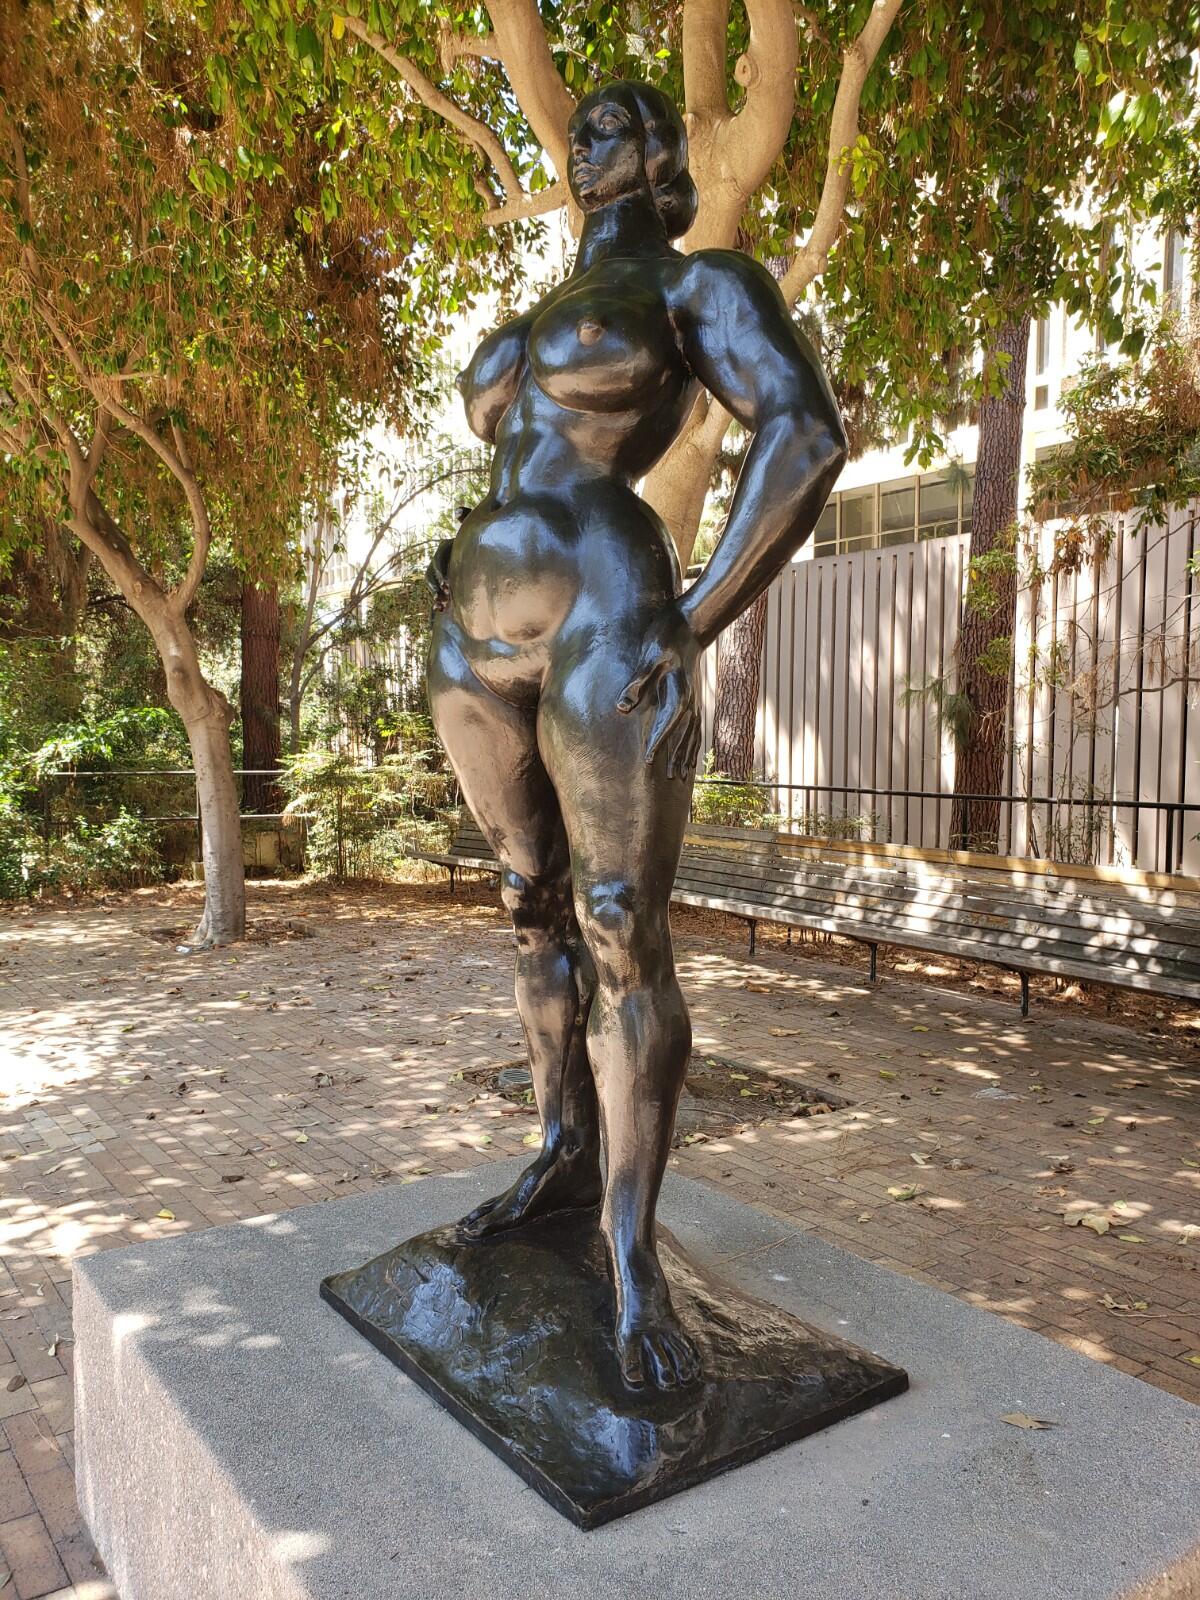 Gaston Lachaise, "Standing Woman," 1932, bronze.